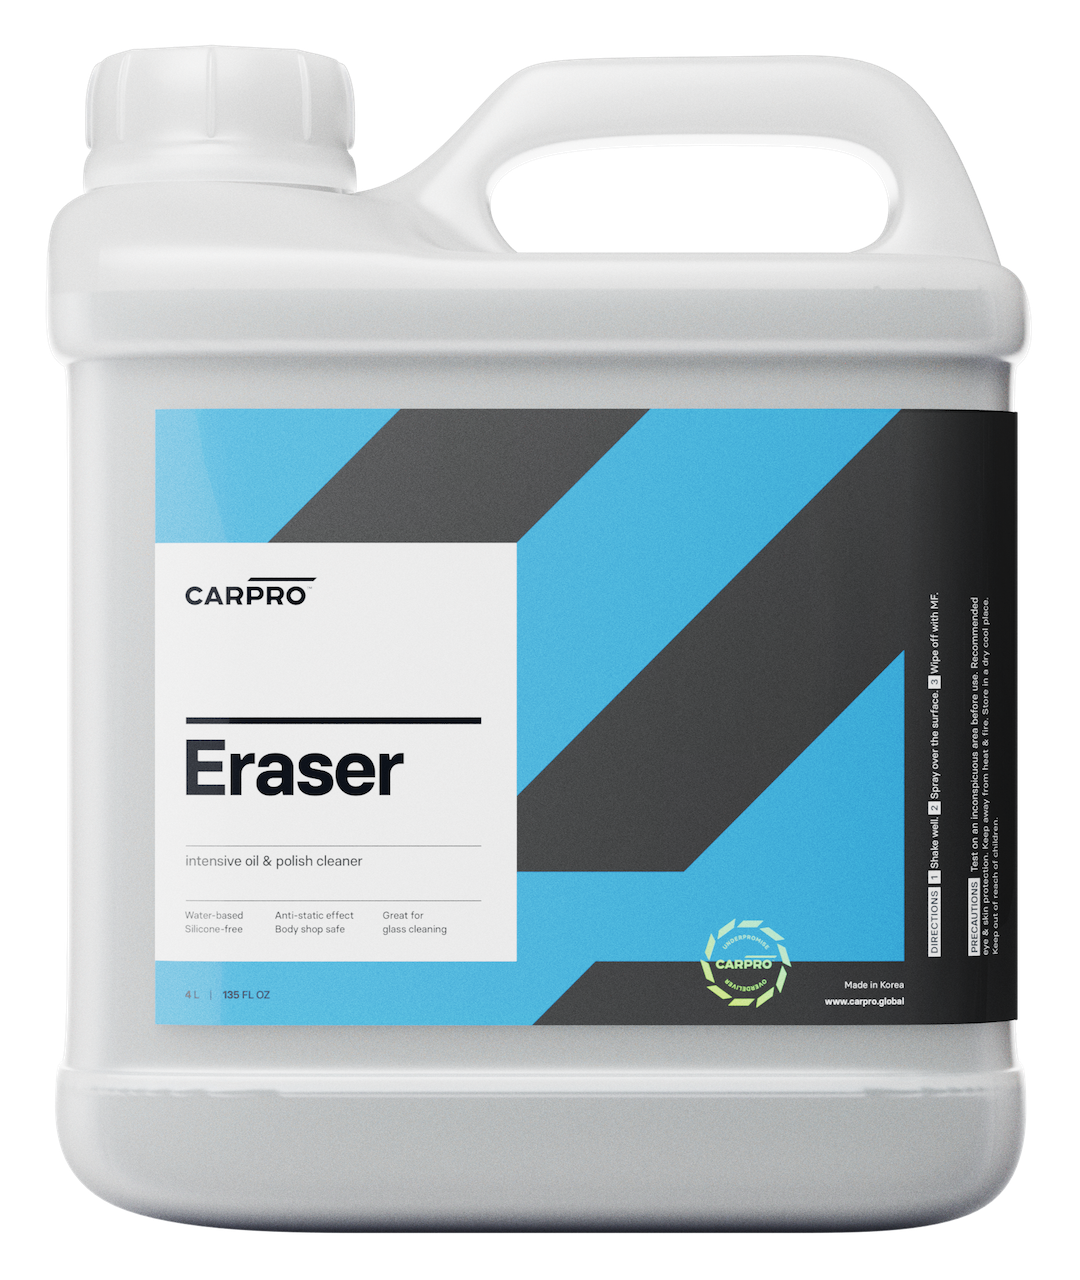 CarPro - Eraser